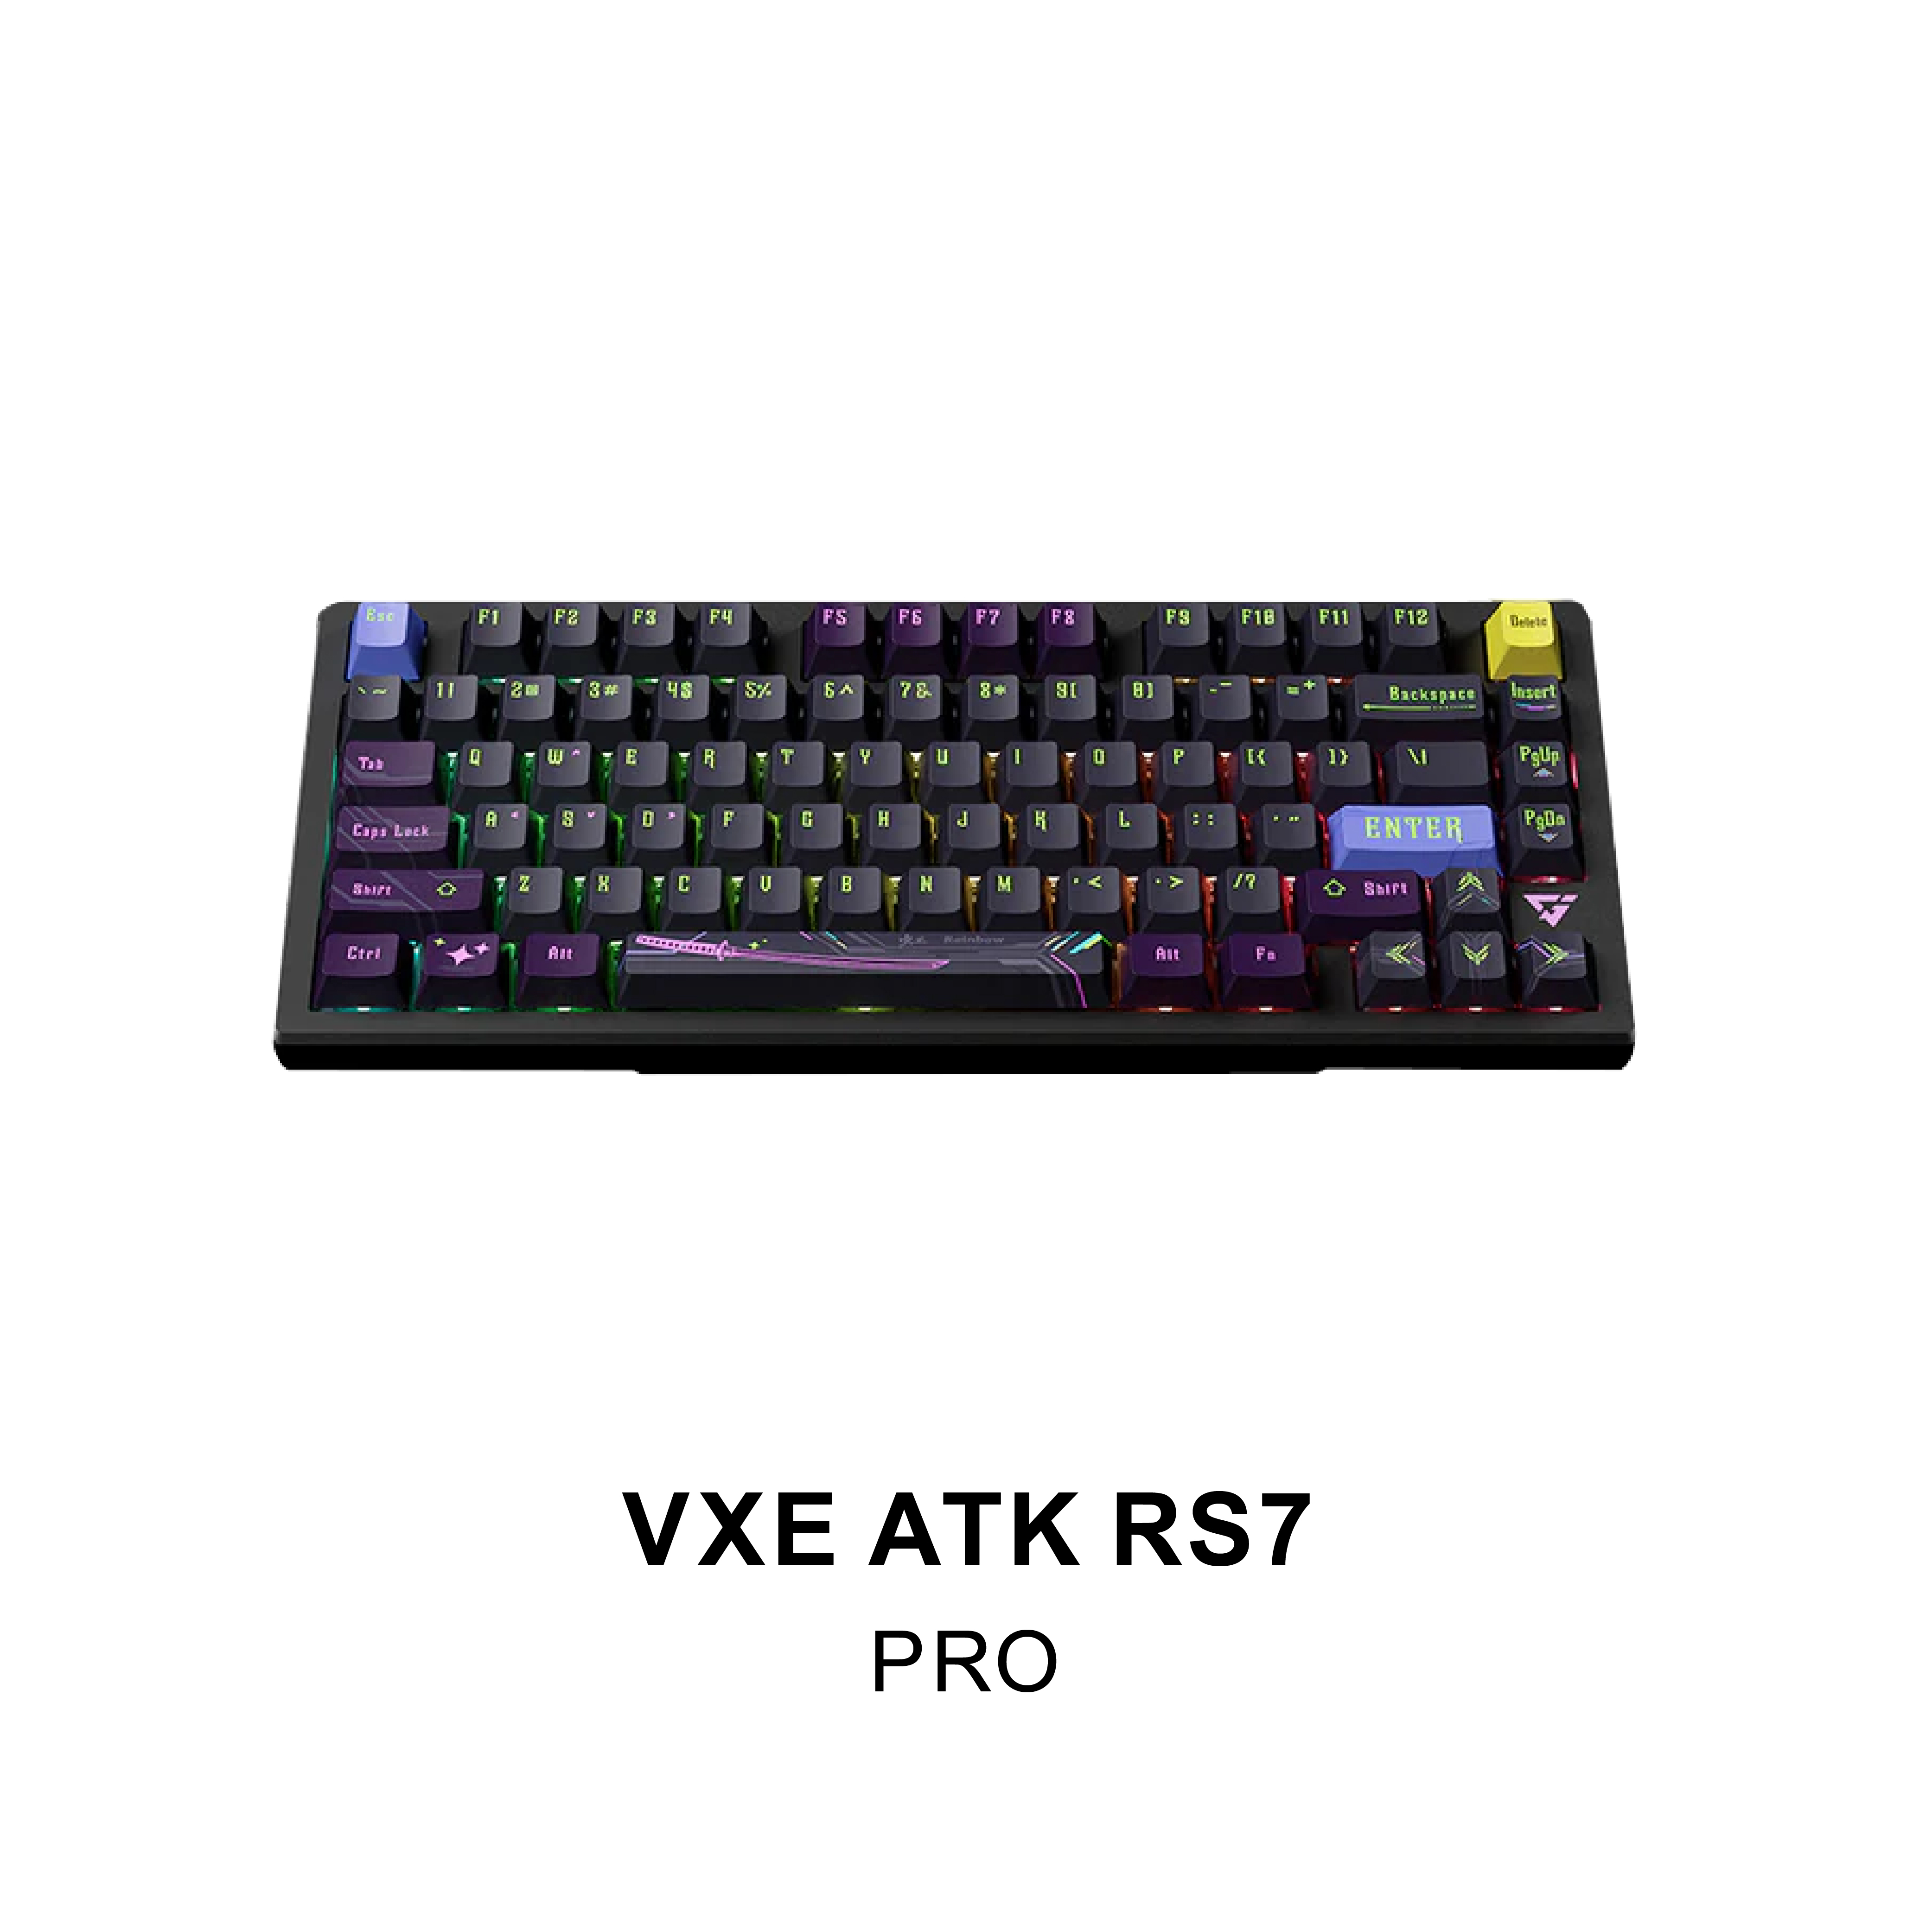 VXE ATK RS7 PRO